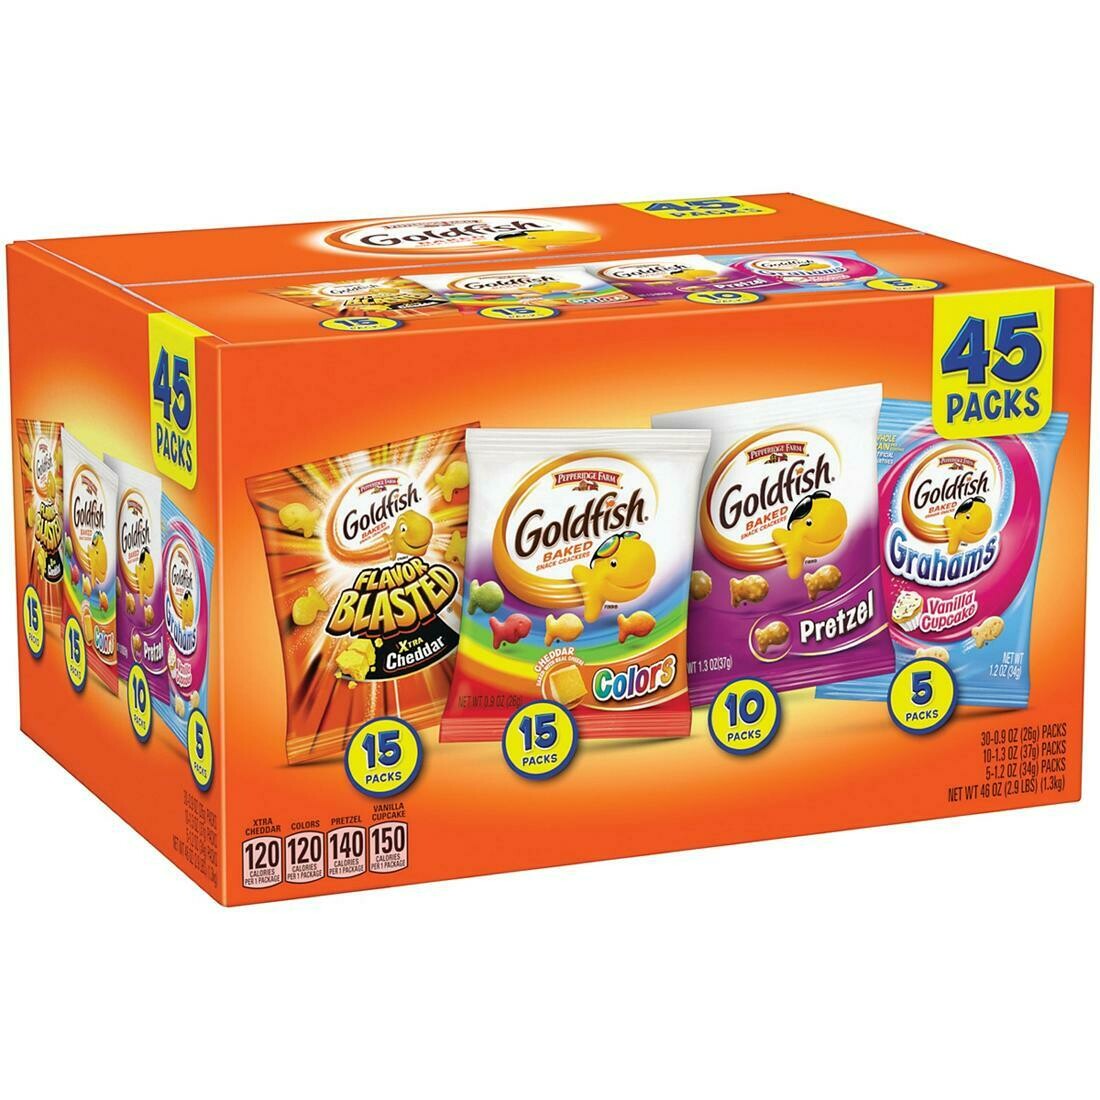 Goldfish Variety Pack Box 45ct (15 Xtra cheddar, 15 cheddar colors, 10 pretzel, 5 vanilla cupcake)